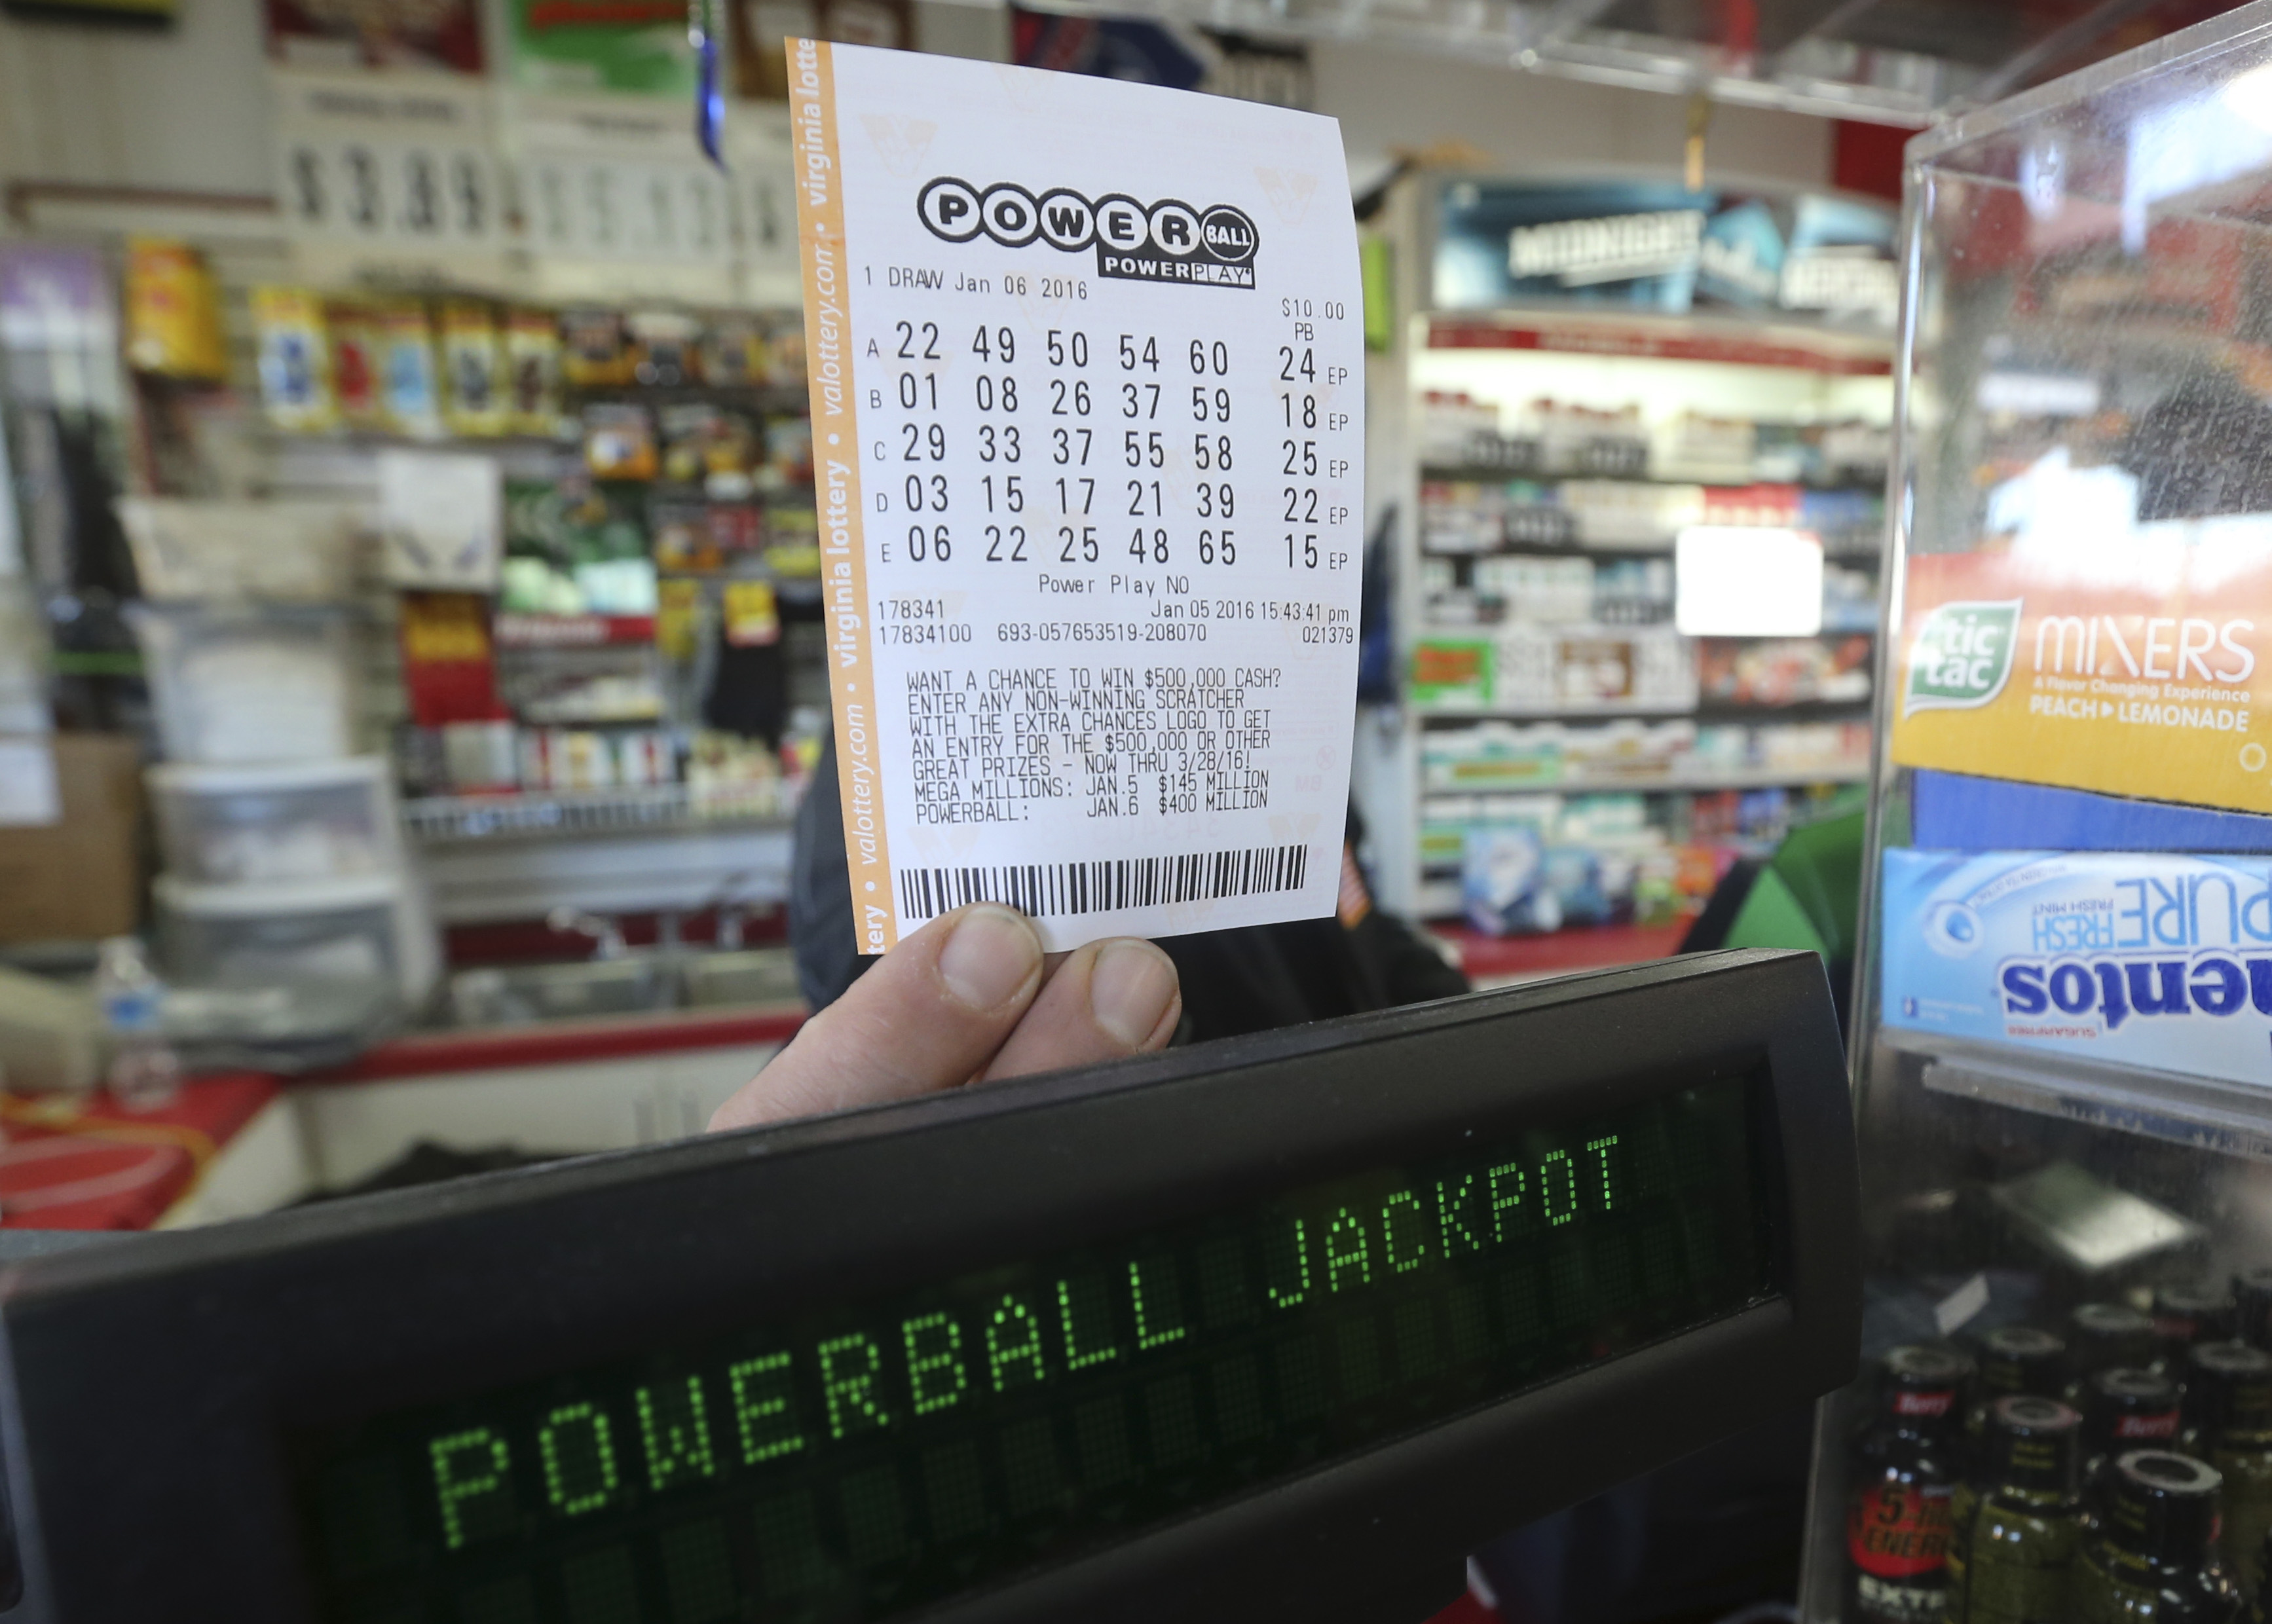 Winning Powerball numbers picked for $500M jackpot - CBS News